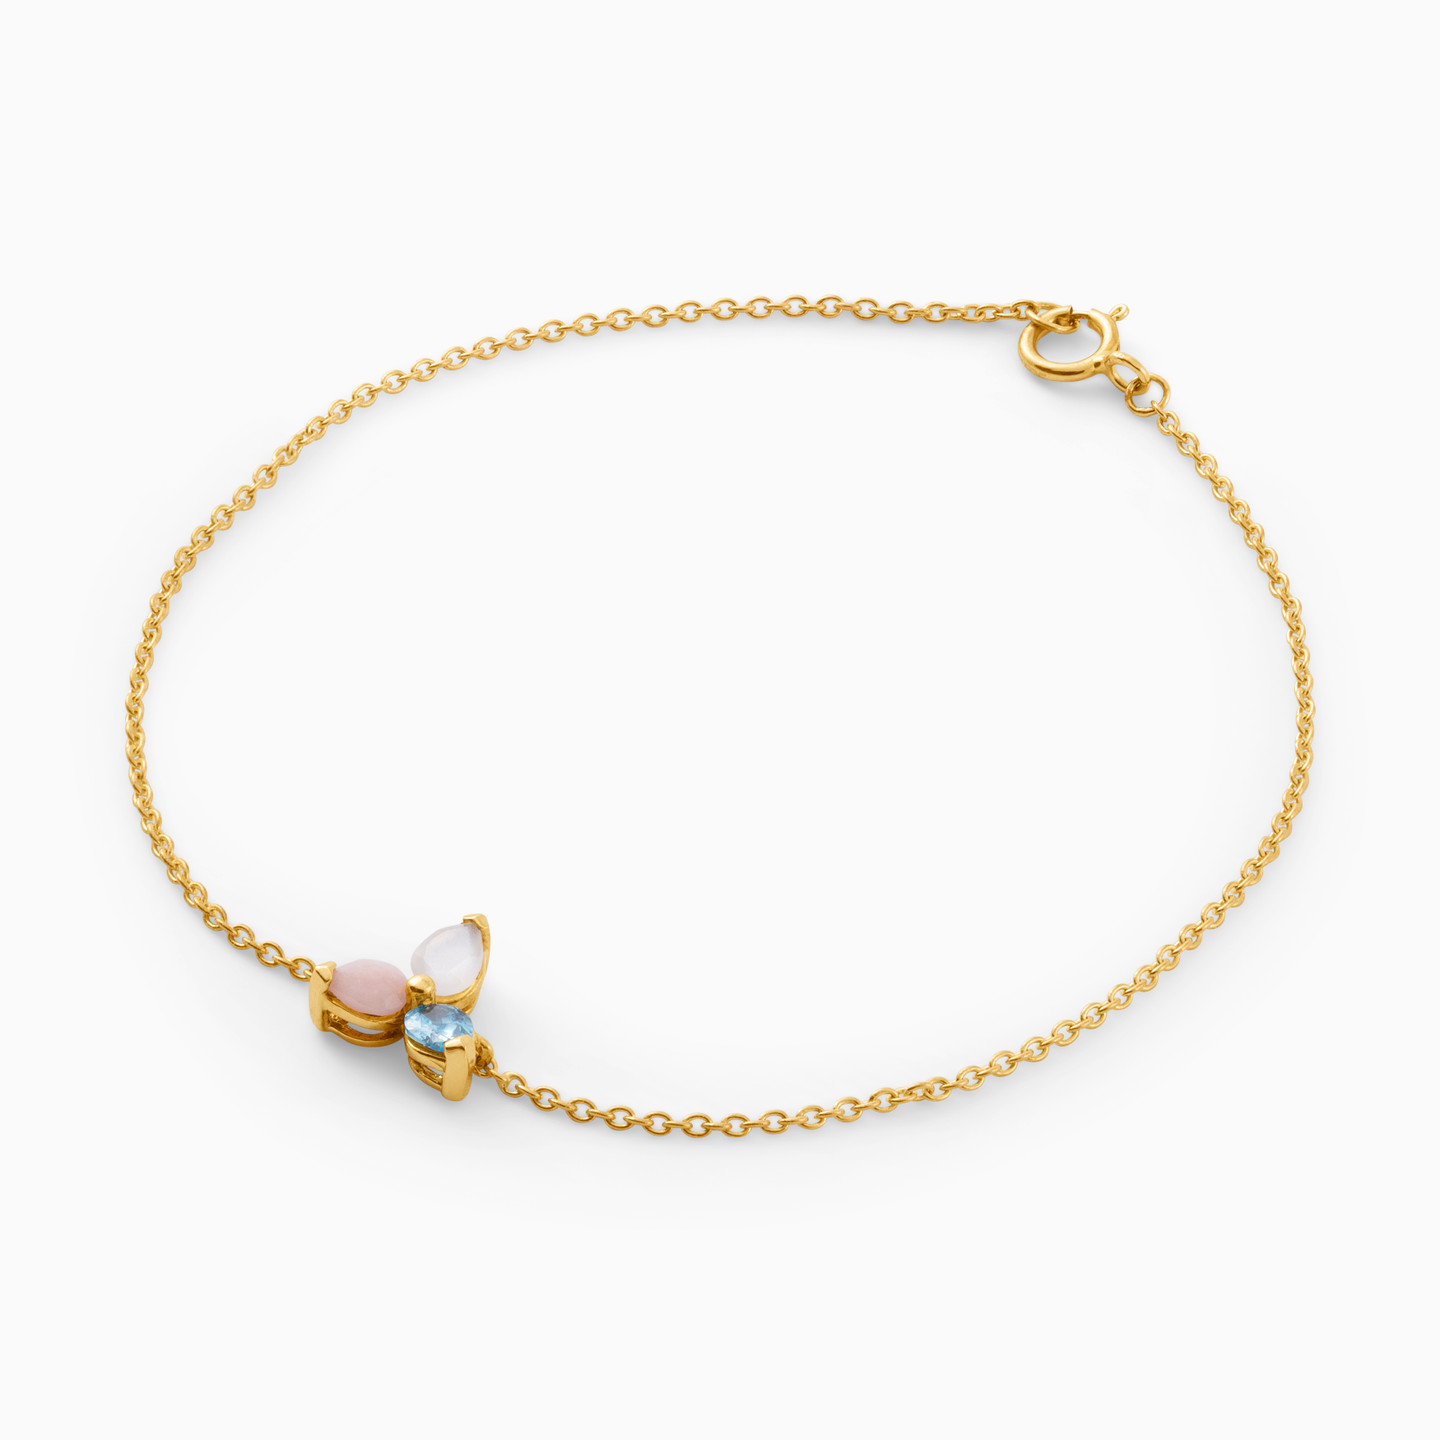 21K Gold Colored Stones Chain Bracelet - 2